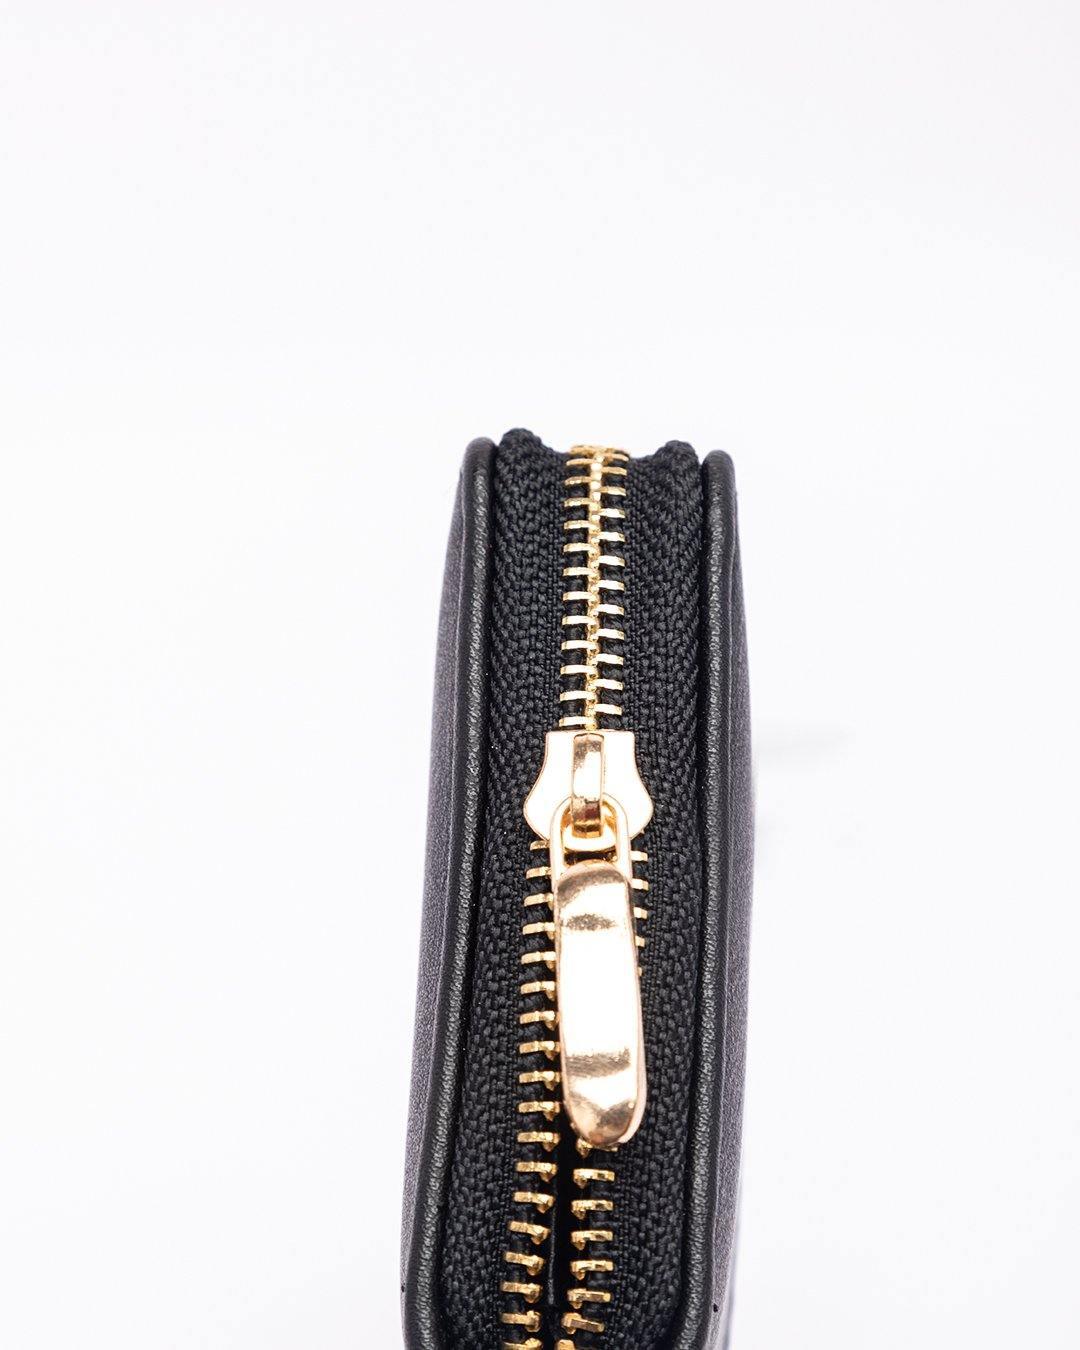 Wallet, Purse, Glitter Design, for Women, Black, Rexine - MARKET 99